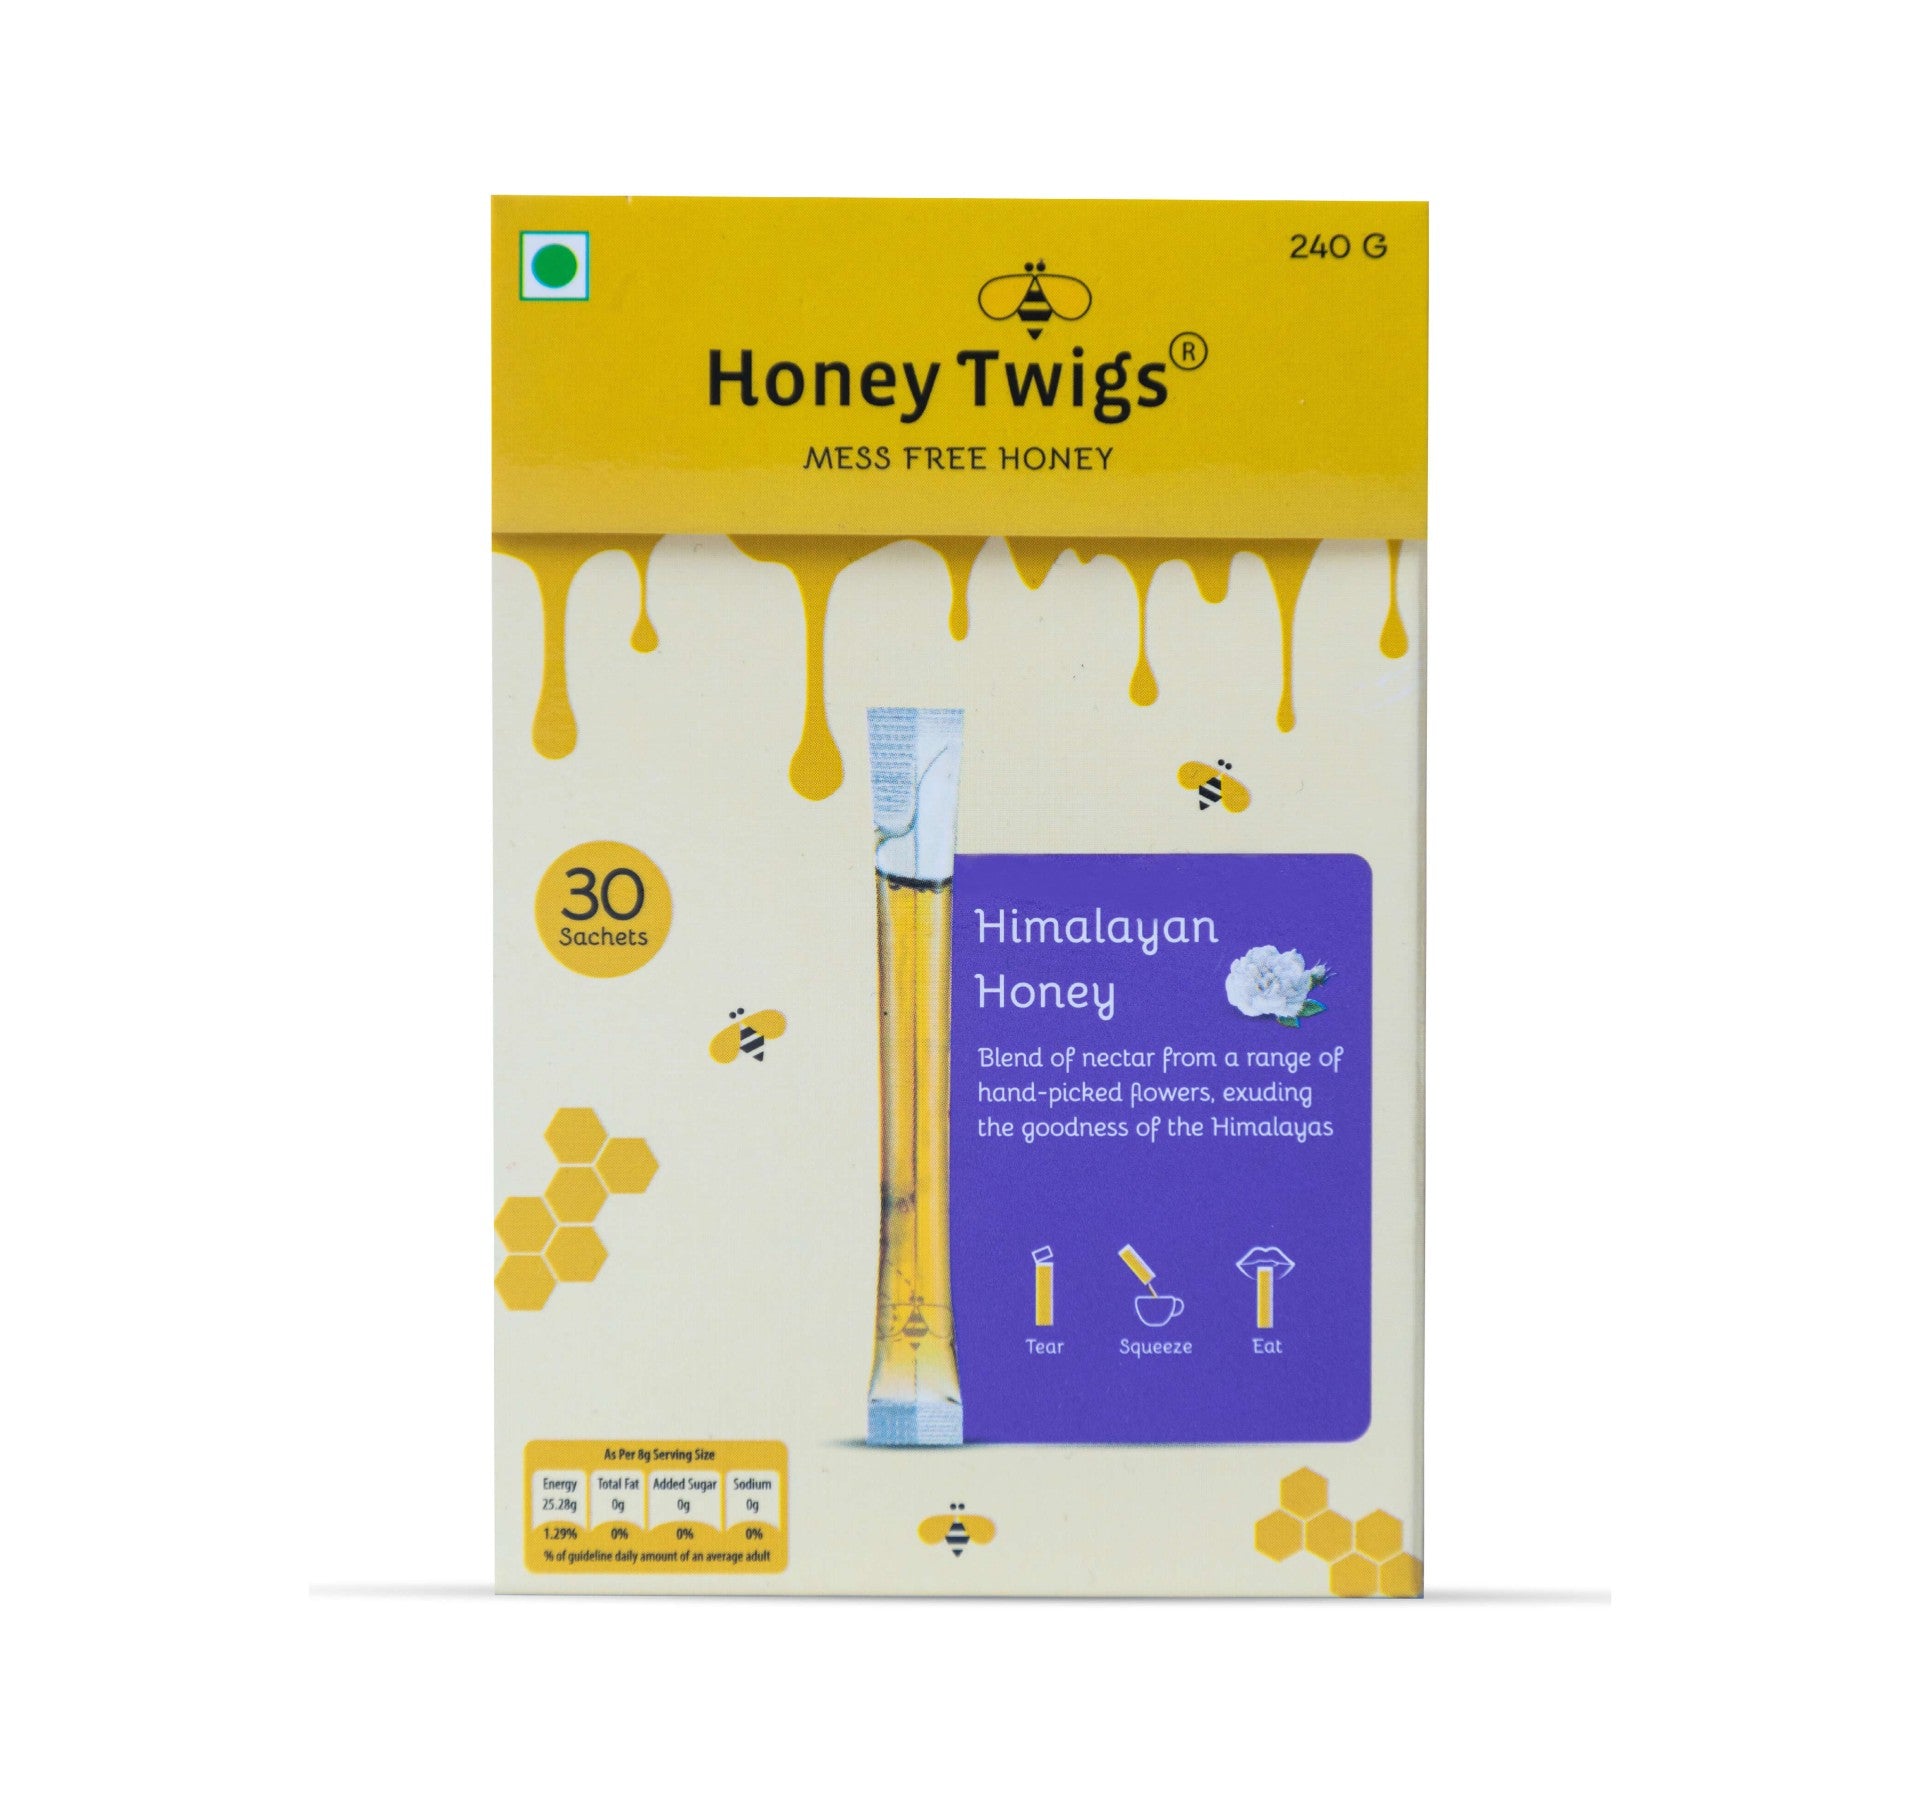 HONEY TWIGS Himalayan Honey, 240g - Pack of 30 Sachets